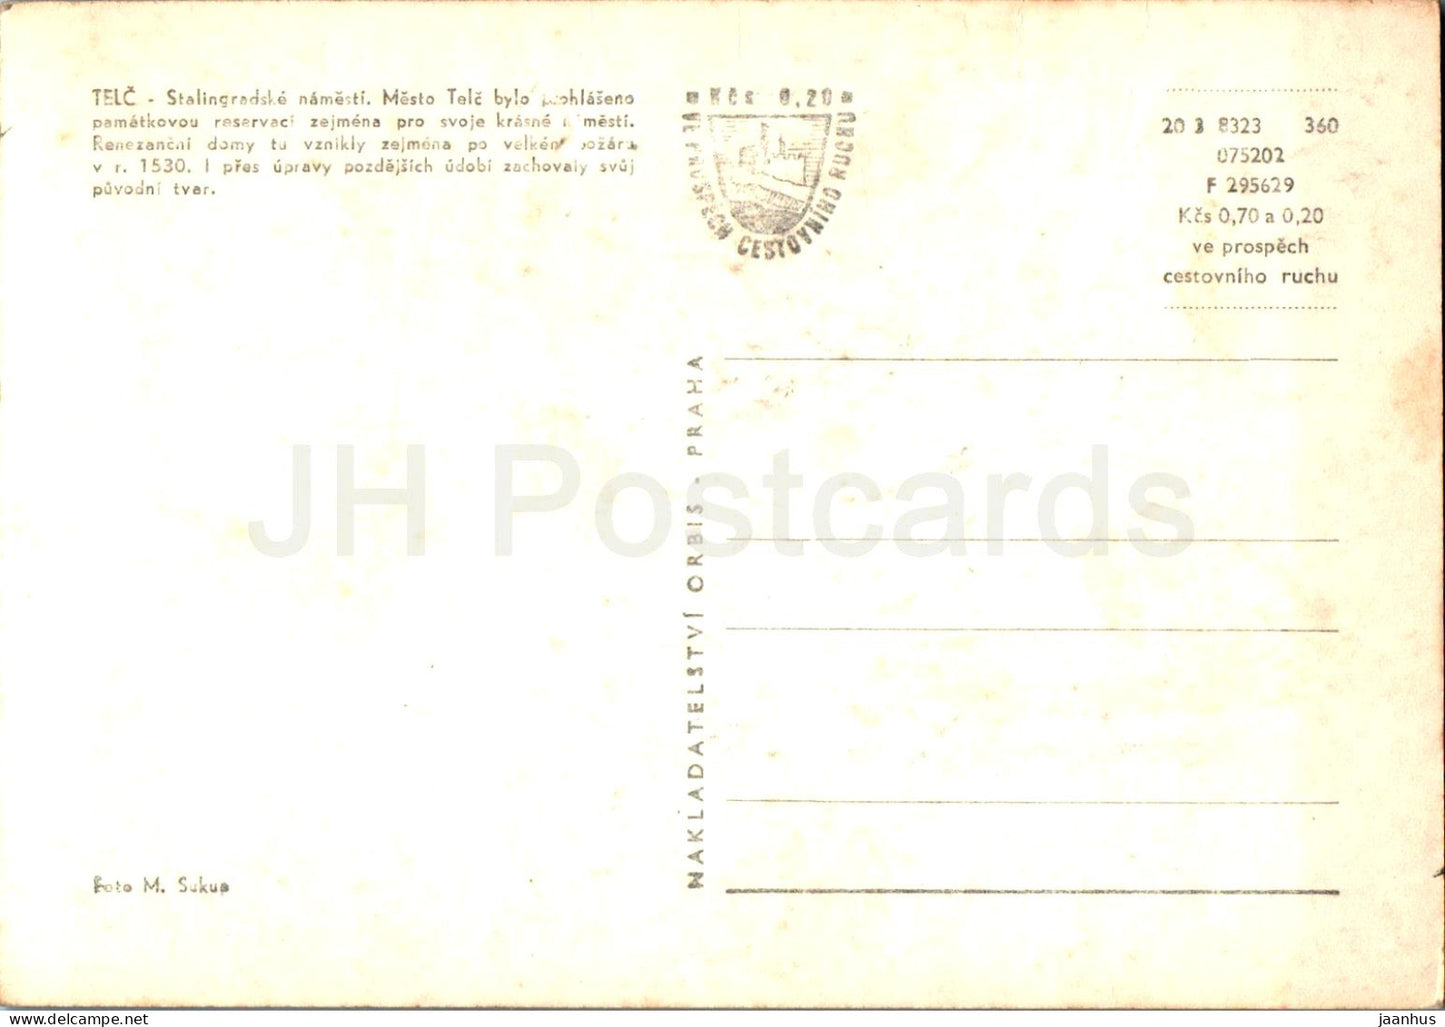 Telc - Stalingradske namesti - Stalingrad square - old postcard - Czech Repubic - Czechoslovakia - unused